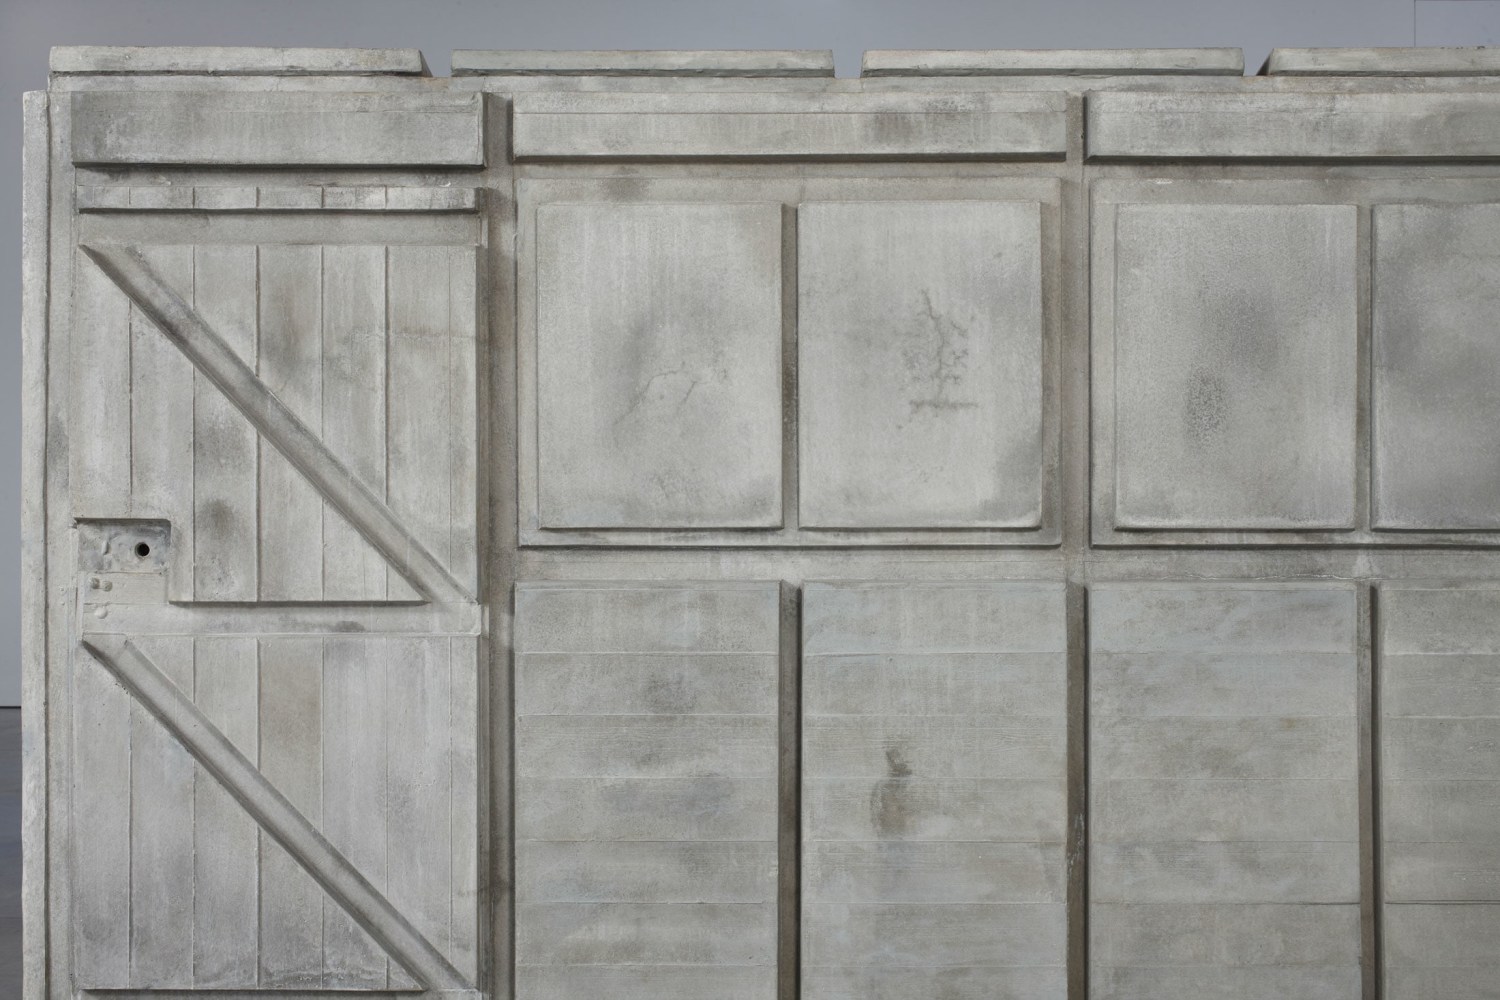 Rachel Whiteread
Detached III, 2012
Detail
Concrete and steel
77 1/8 x 67 11/16 x 115 11/16 inches&amp;nbsp;
(196 x 172 x 294 cm)